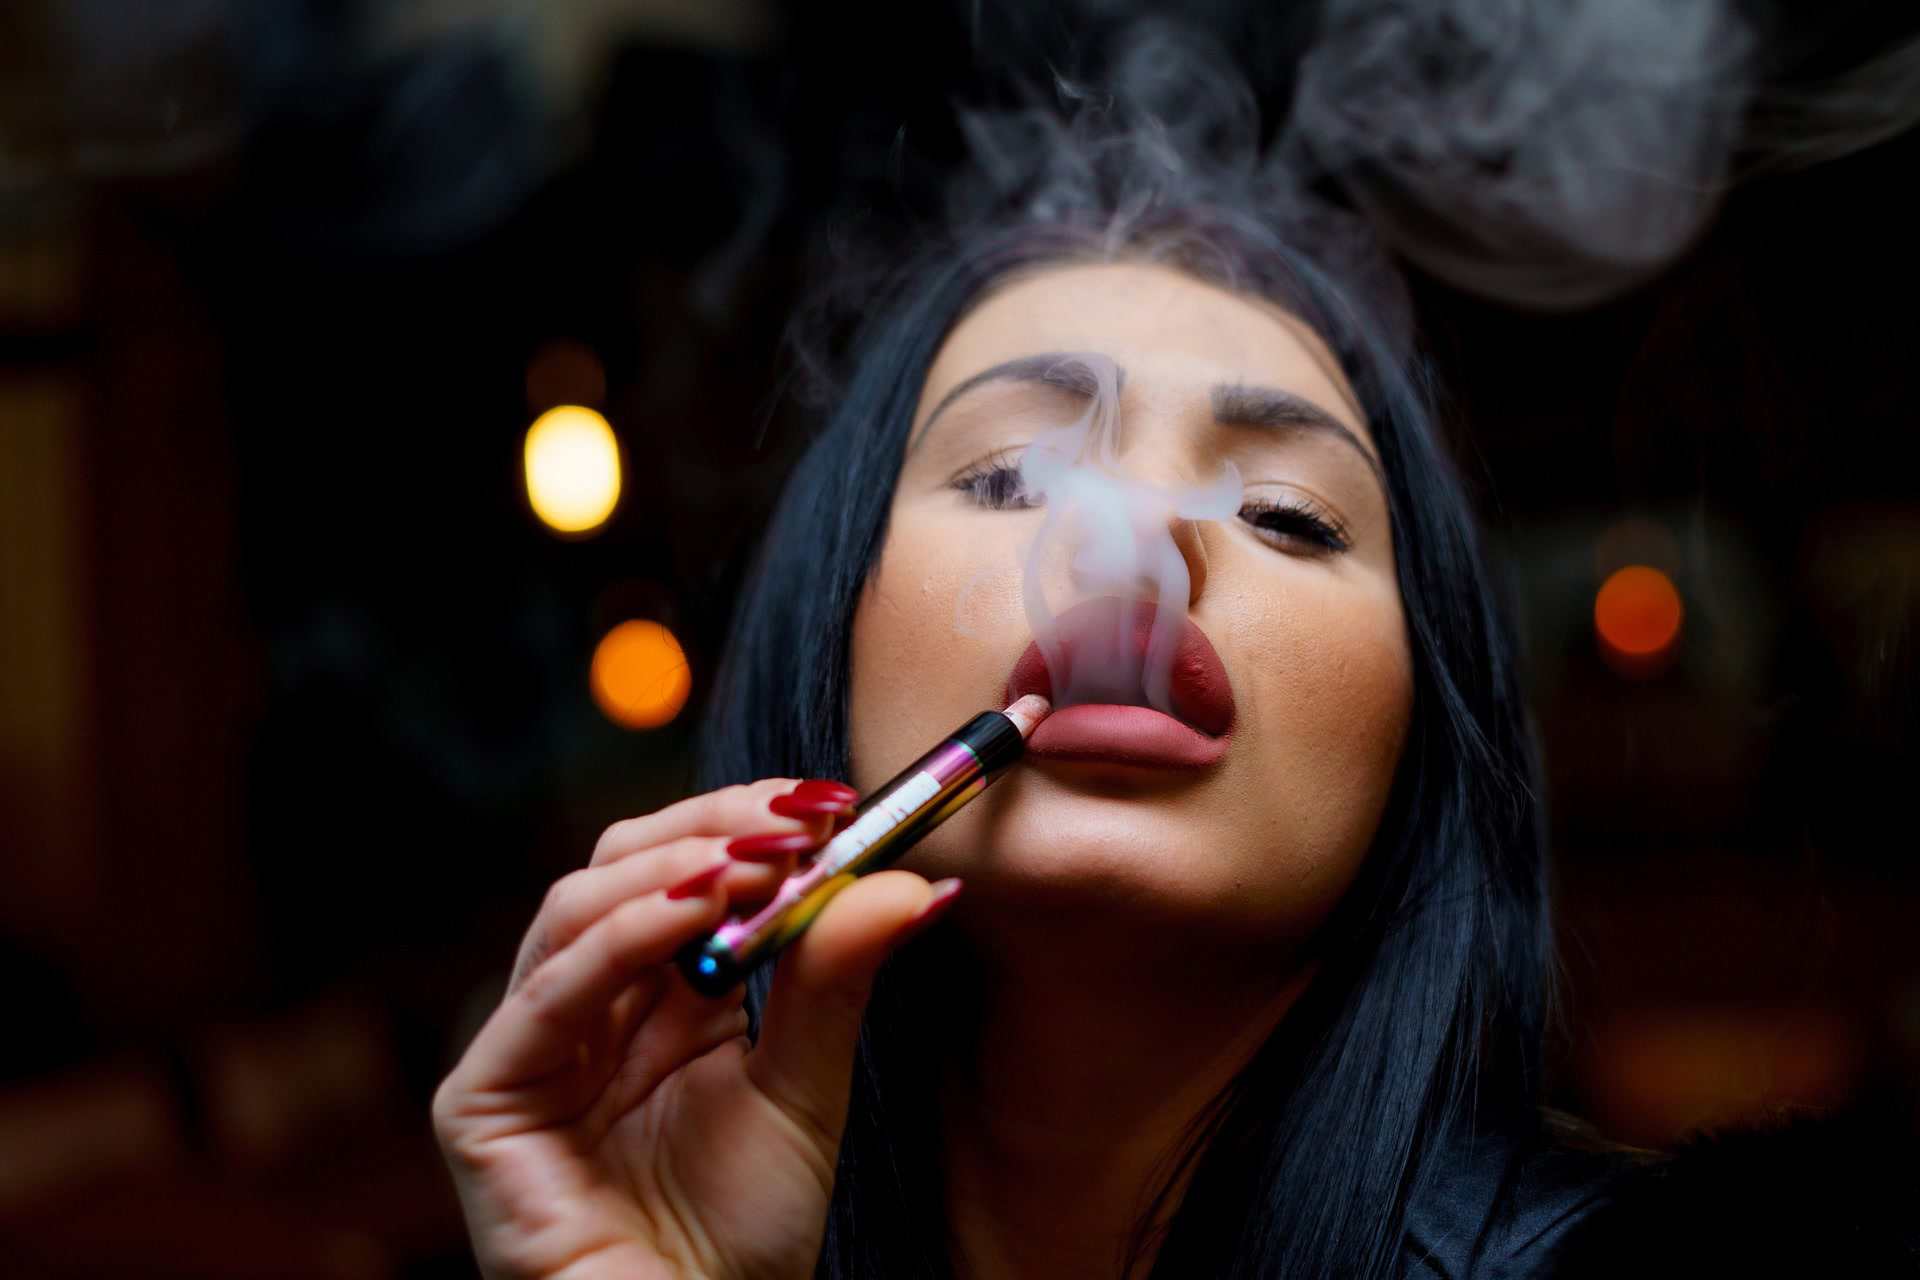 E-Cigarettes Under Federal Control Now via FDA Rules